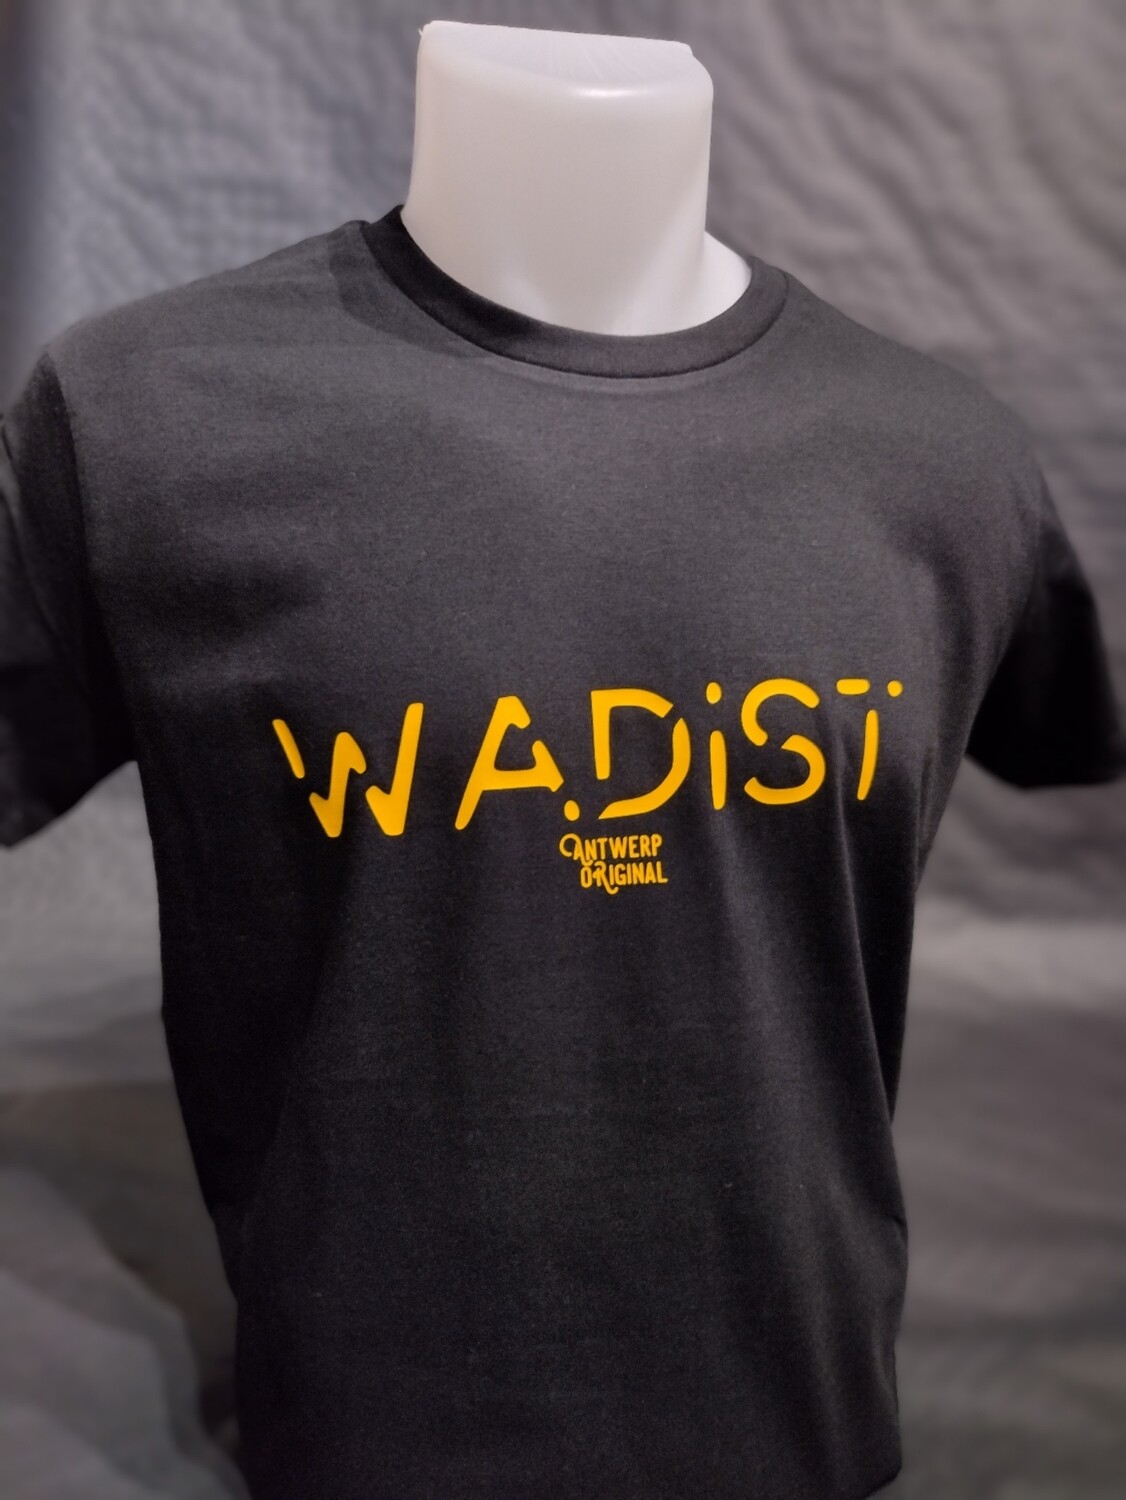 T shirt - Wadist